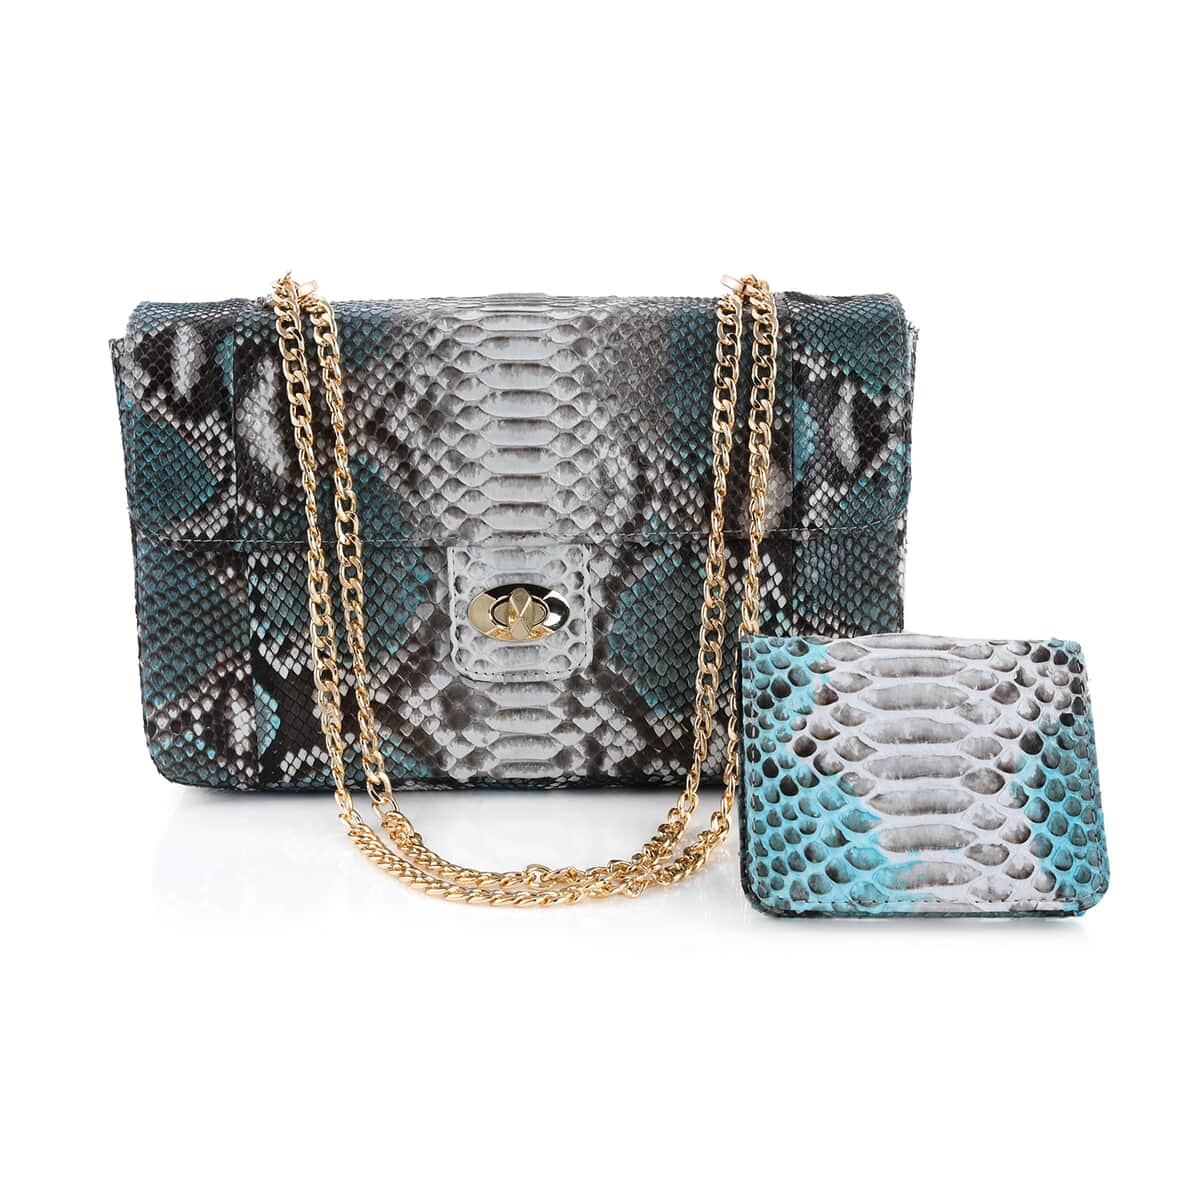 Genuine python top handle bag / designer bag / exotic leather bag / summer  bag genuine snake leather / crossbody elegant classy bag